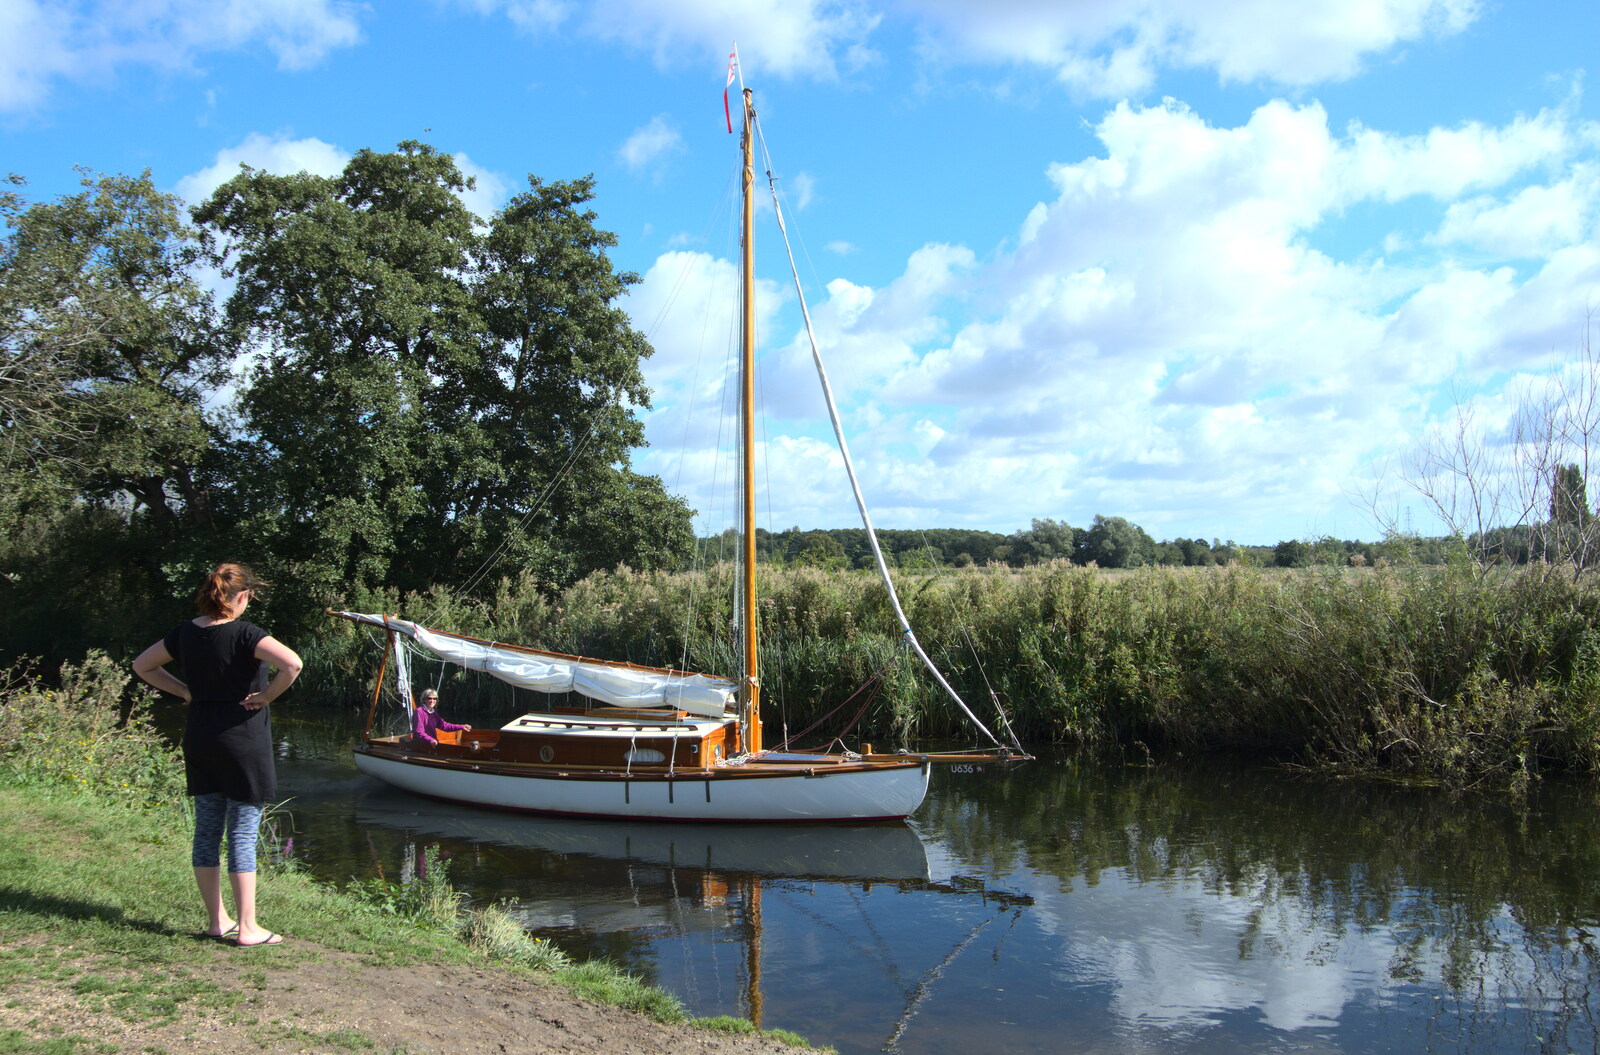 Camping at Three Rivers, Geldeston, Norfolk - 5th September 2020: A nice wooden boat motors past Isobel